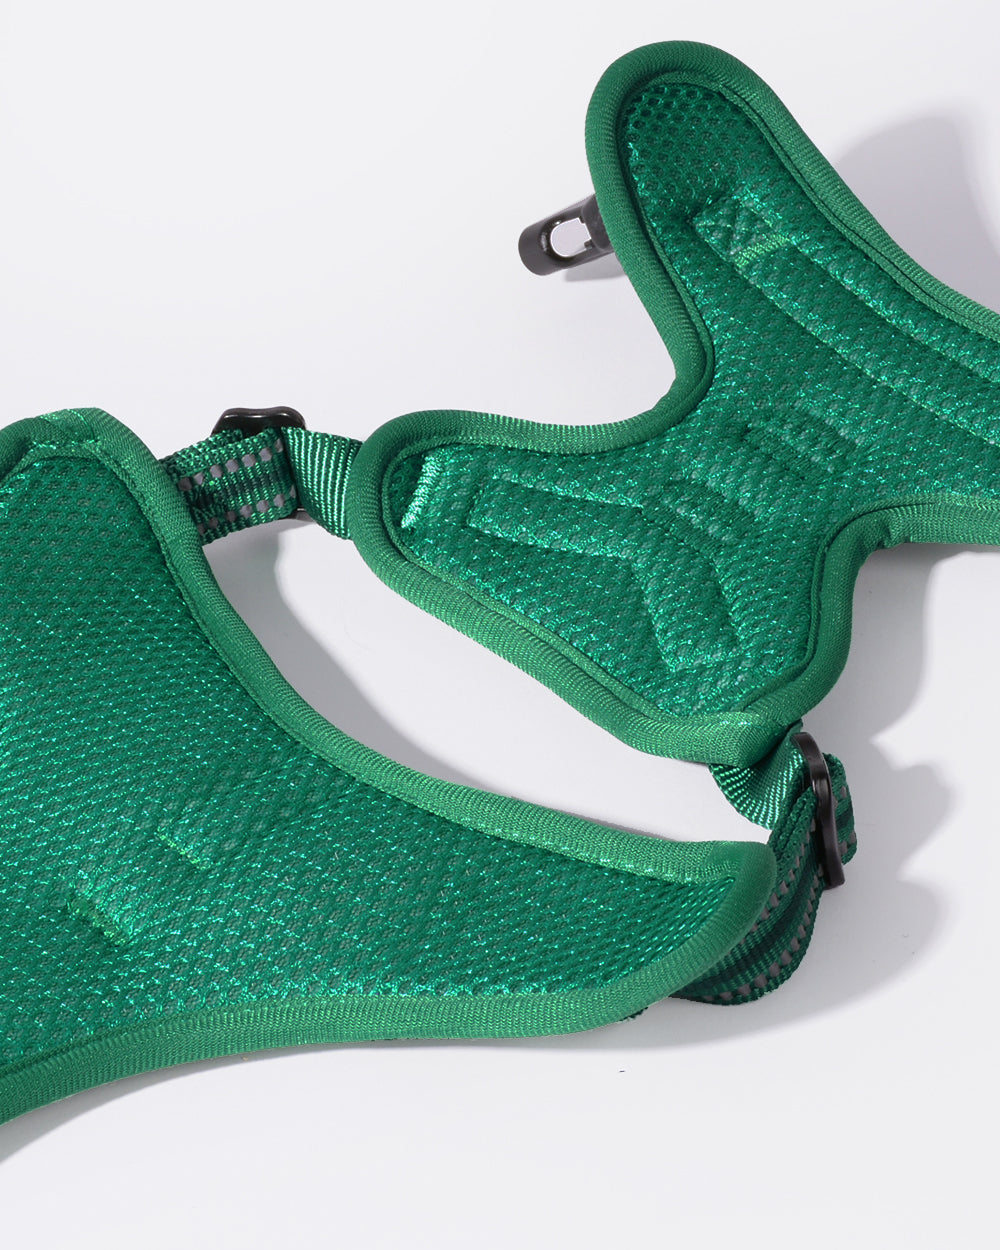 Smart Pro Christmas Harness Set - Scottish Style Green Grid